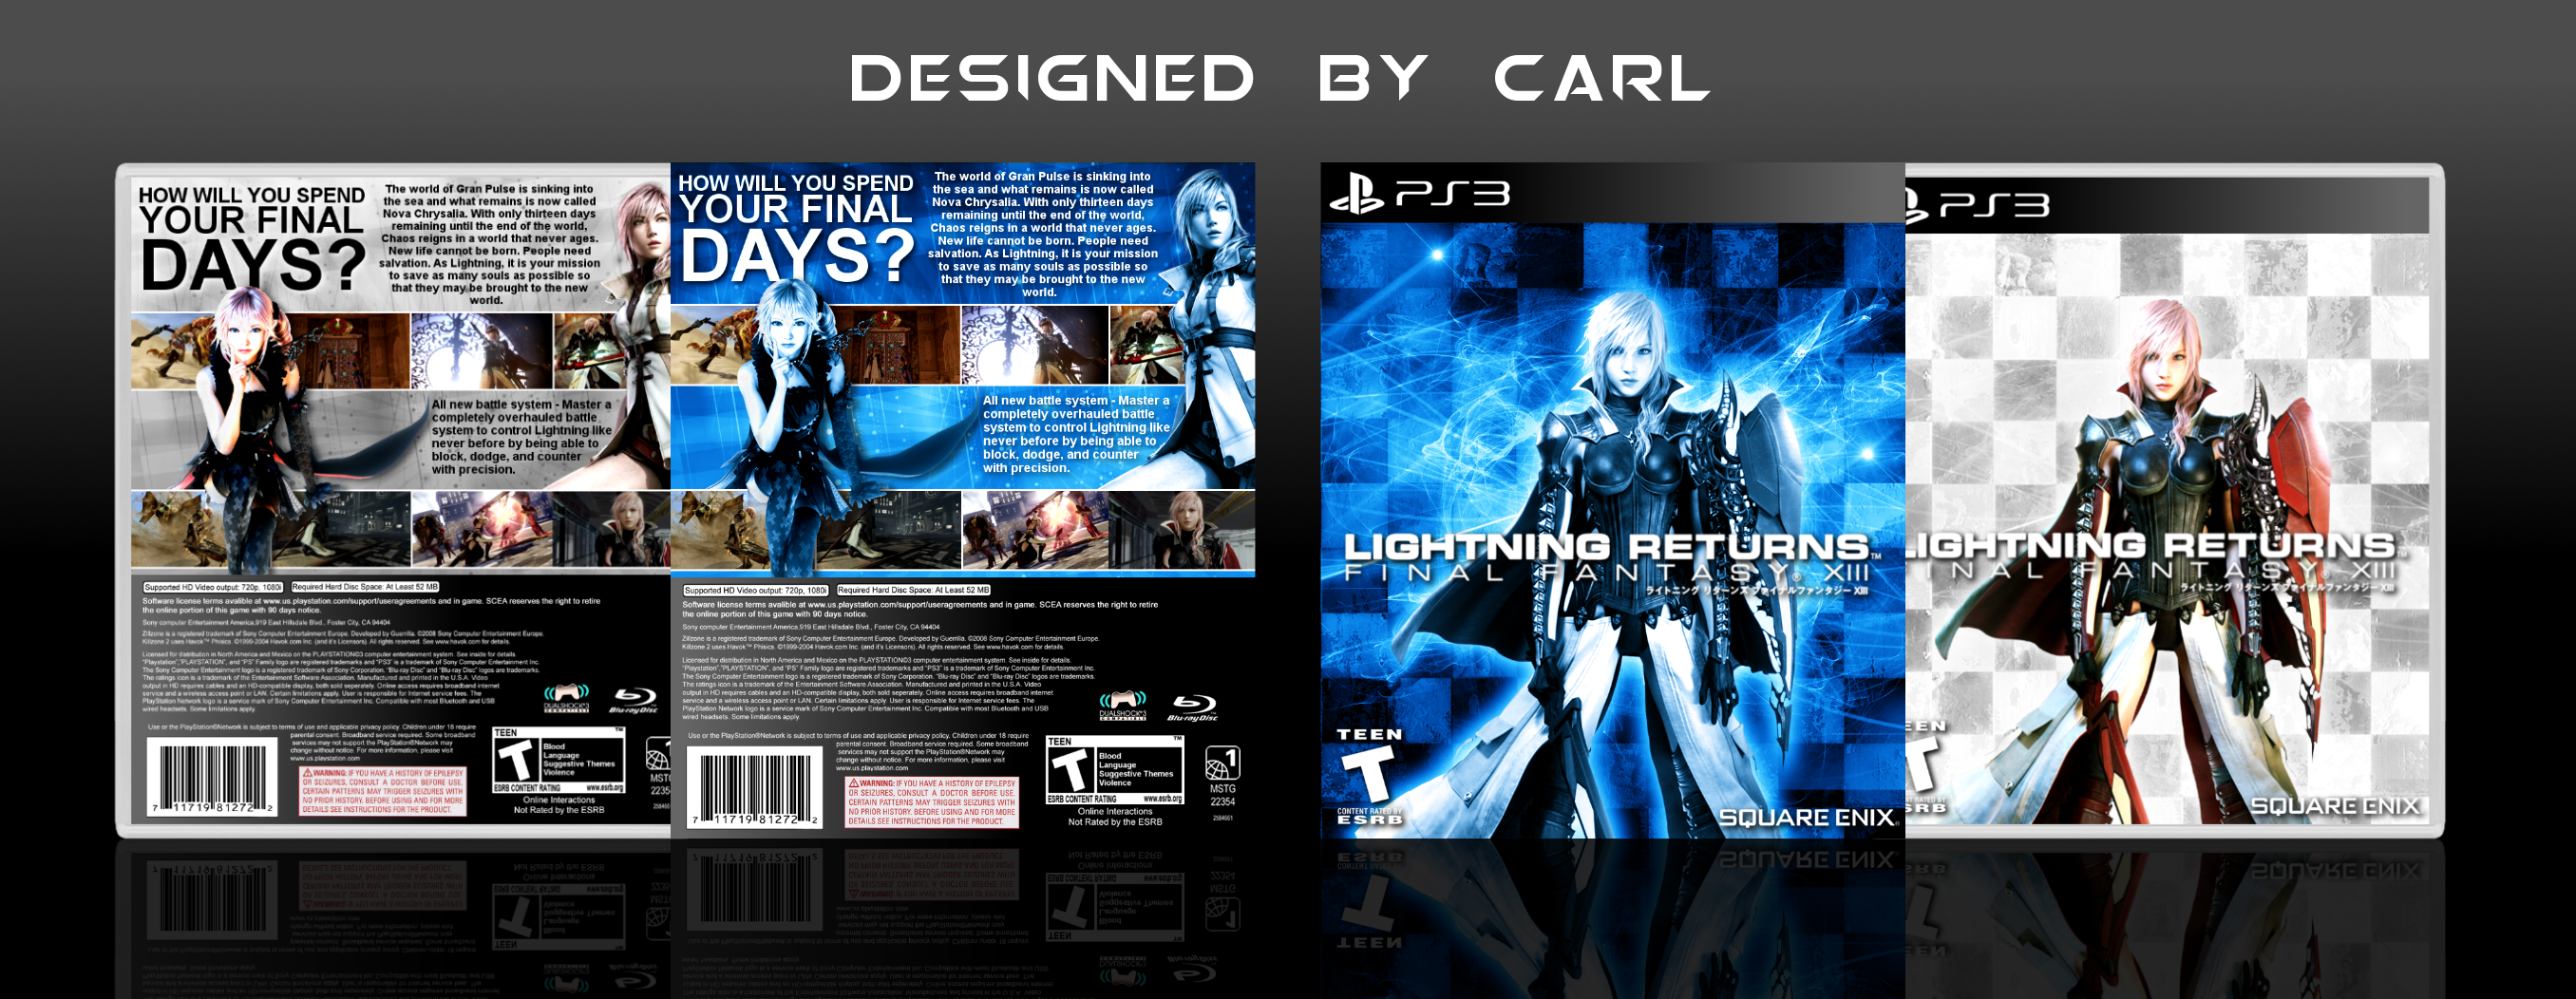 Lightning Returns: Final Fantasy XIII box cover